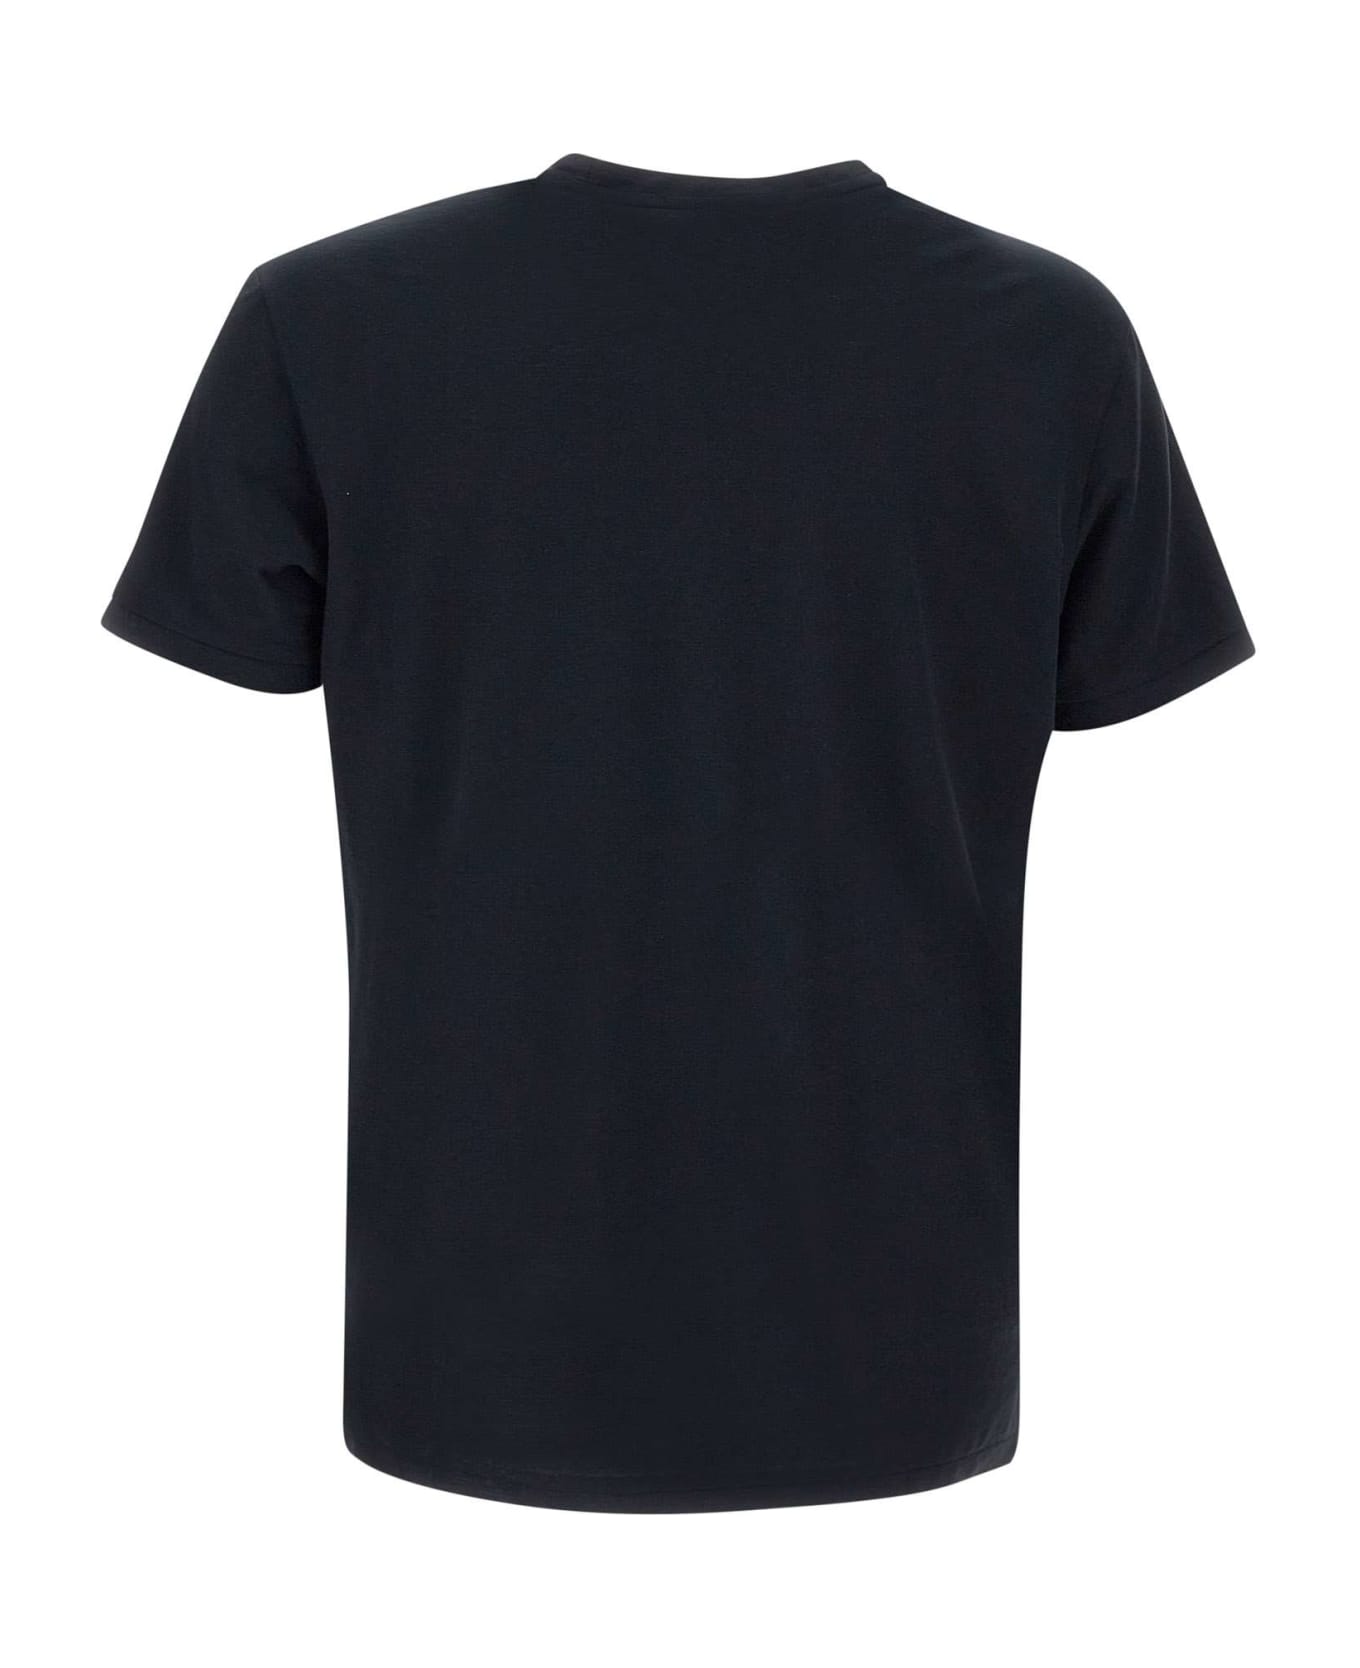 RRD - Roberto Ricci Design 'shirty Crepe' Cotton T-shirt - Blue Black